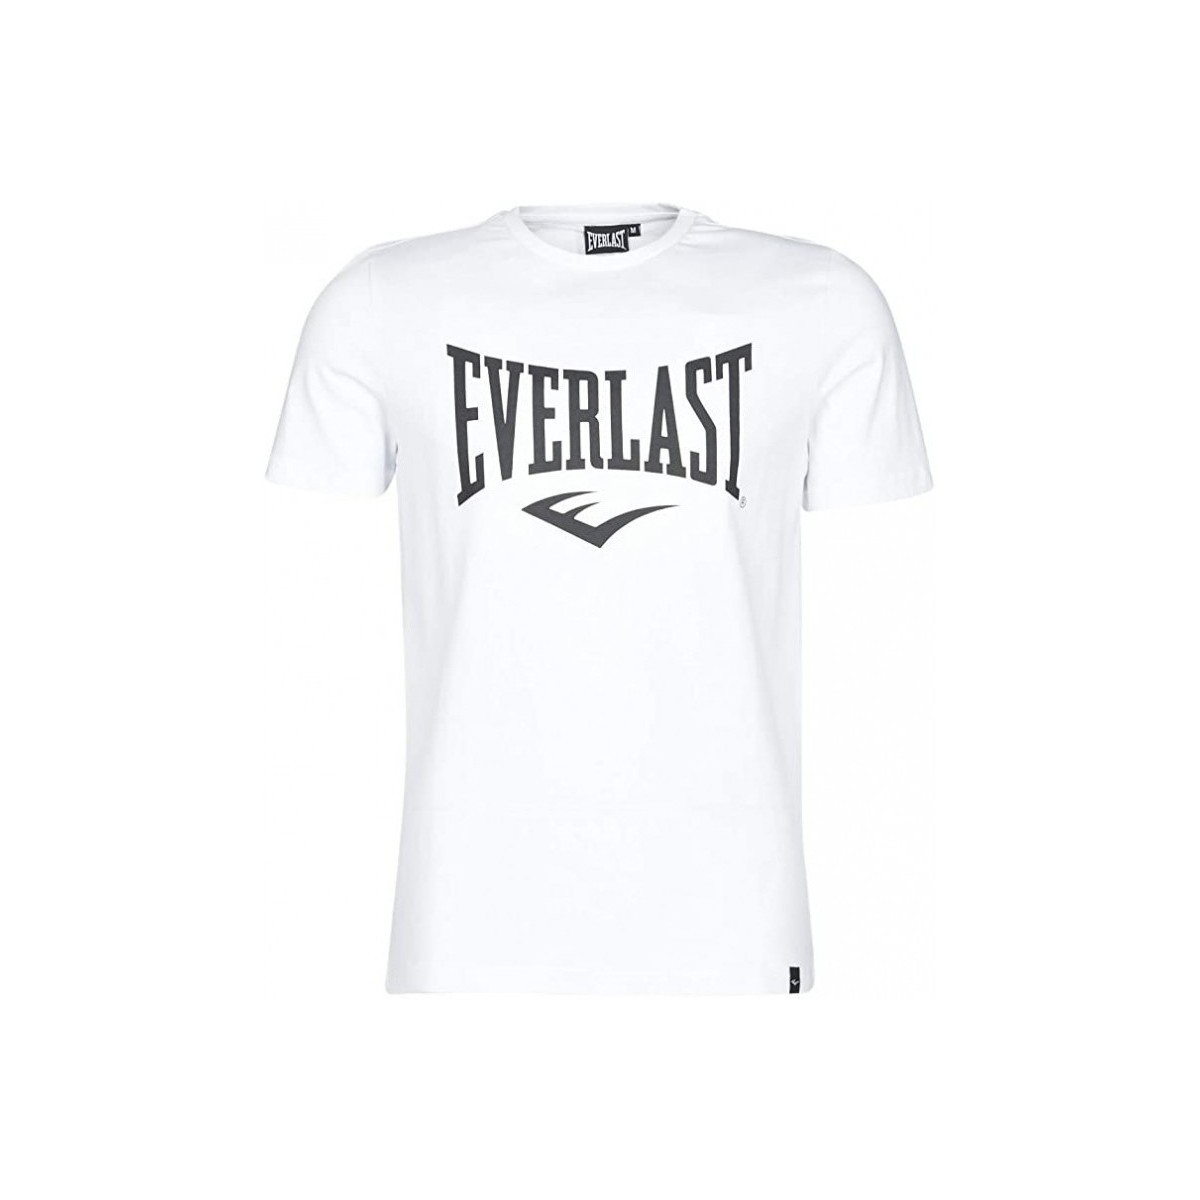 Vêtements Homme Puma OFI Kids Football T-Shirt Tee Shirt 807580-60 Blanc Blanc